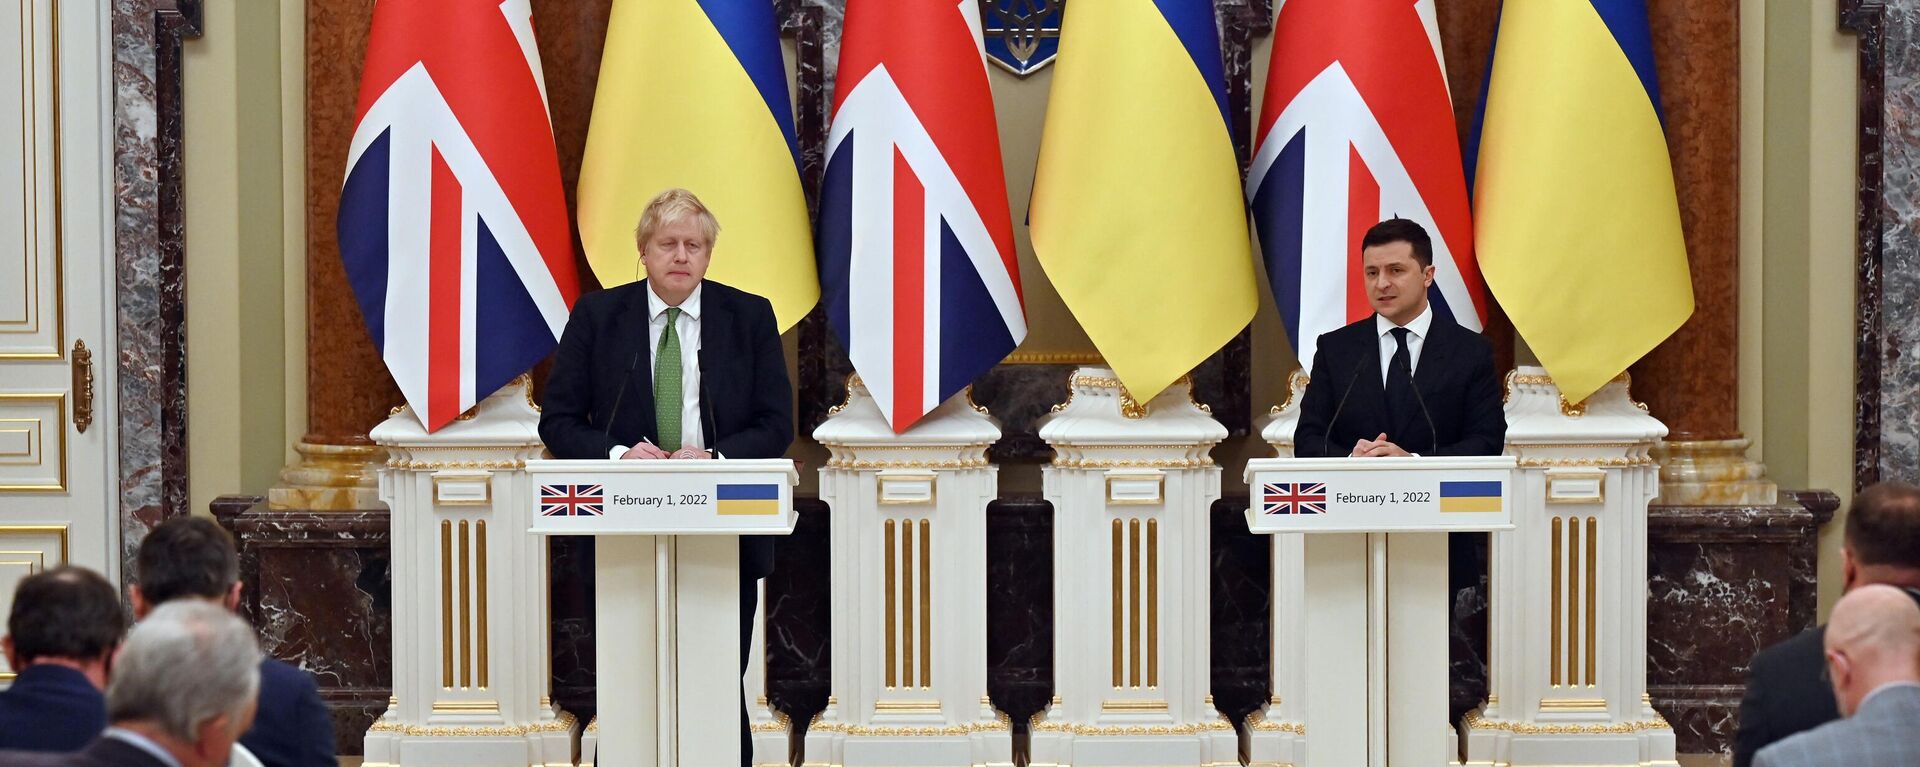 Ukrainian President Volodymyr Zelensky (R) and his British Prime Minister Boris Johnson hold a joint press conference following their talks in Kyiv on February 1, 2022 - Sputnik International, 1920, 02.02.2022